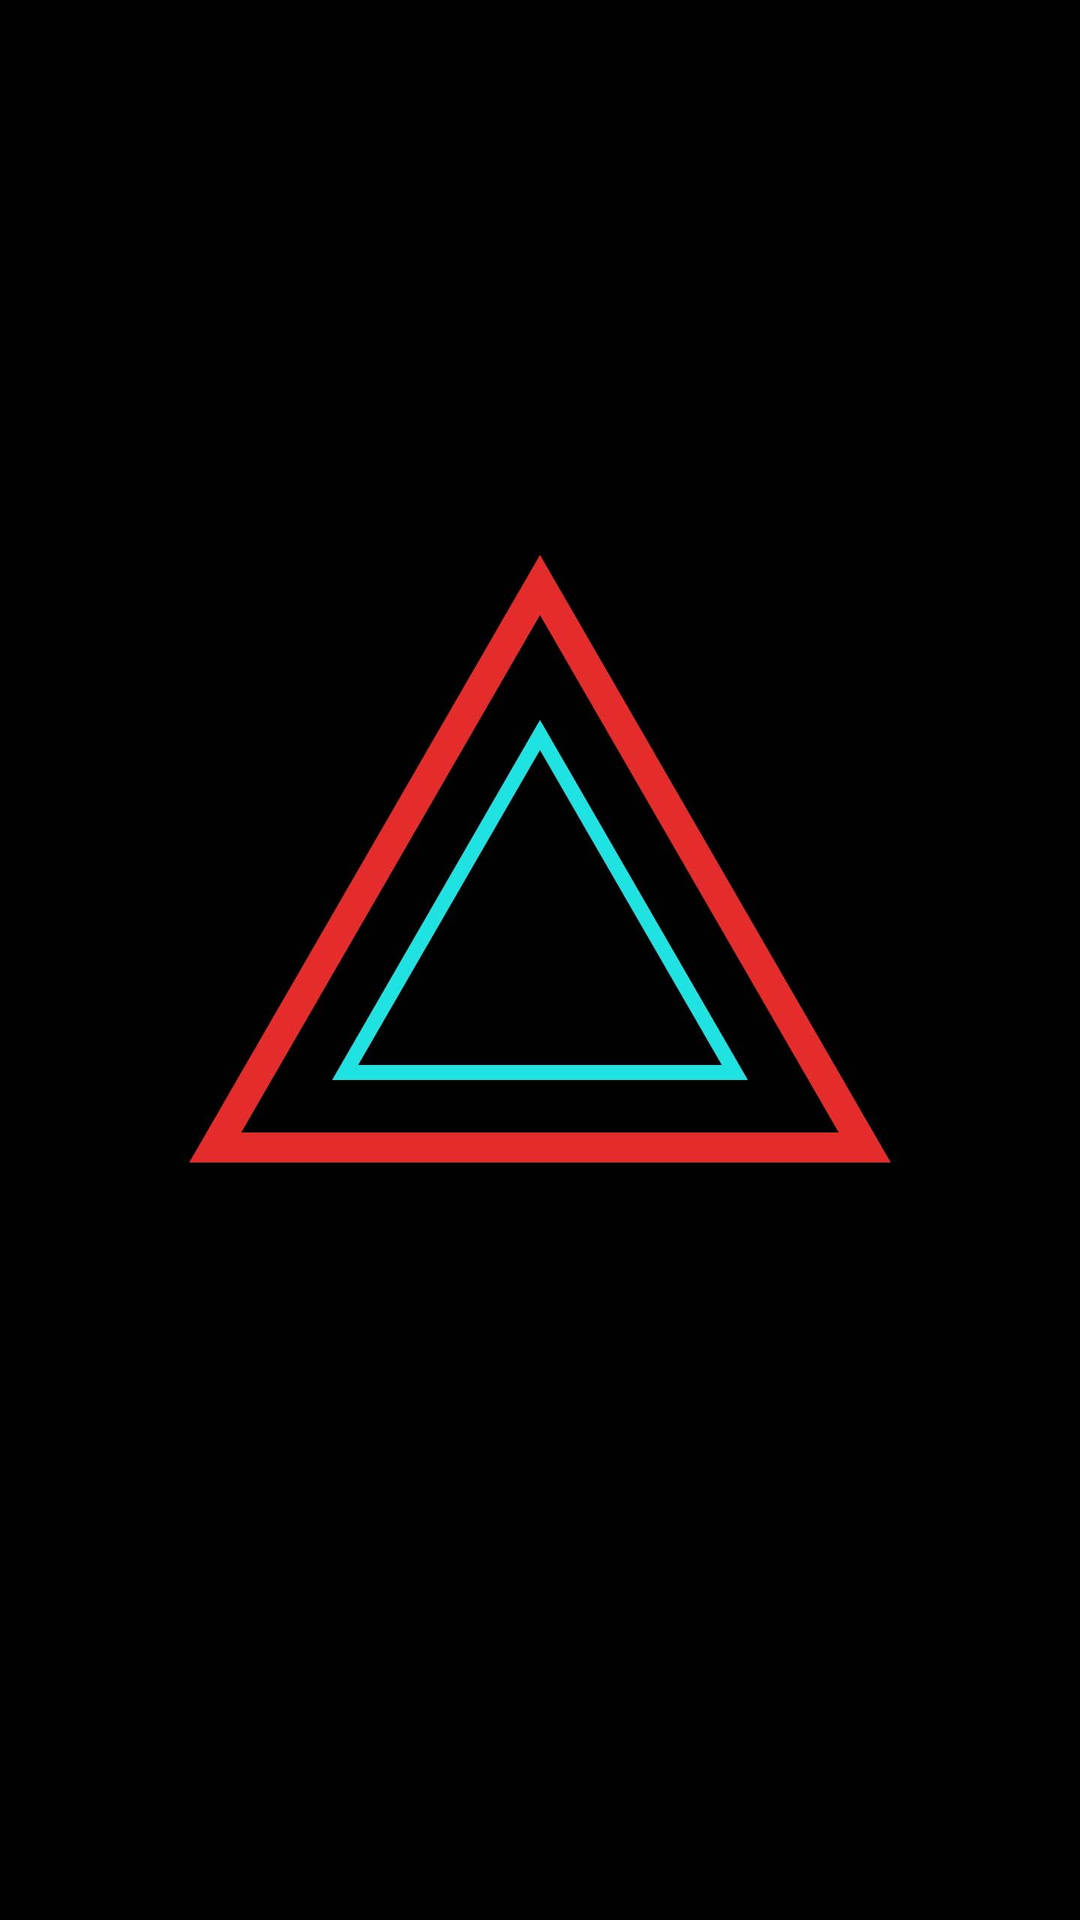 Black Pyramid Neon Red Blue Light Background